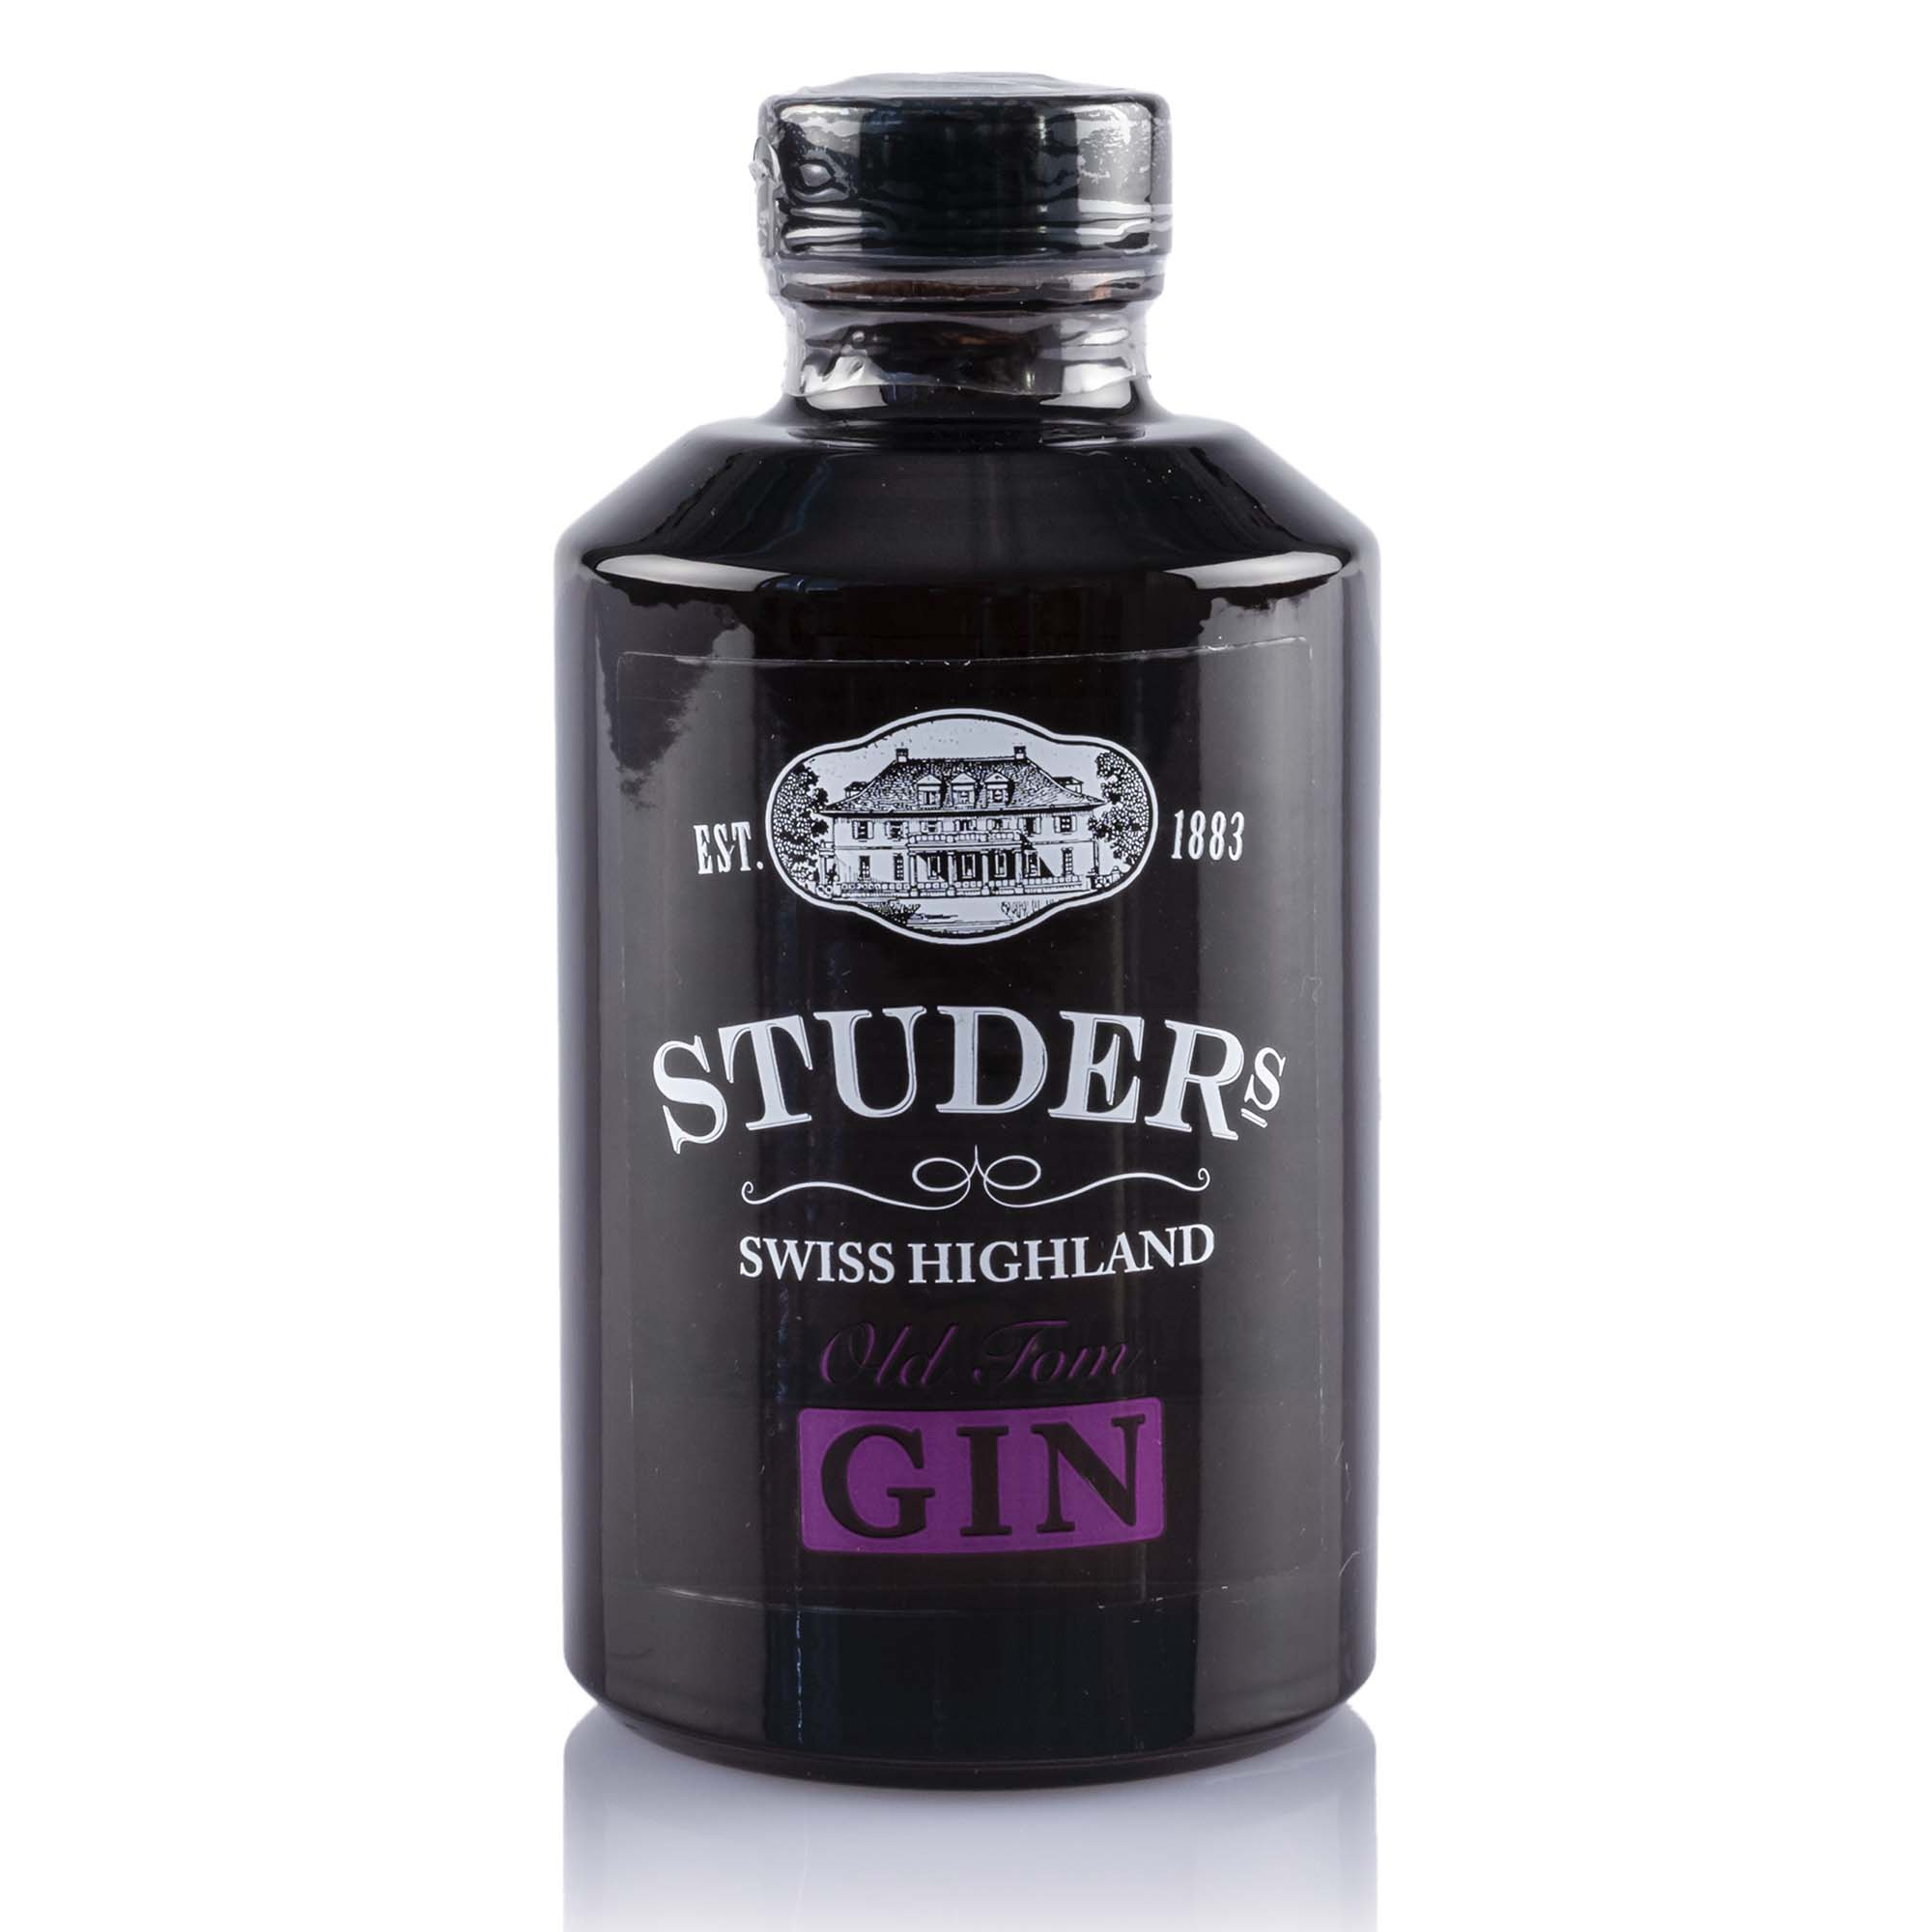 Studer’s Swiss Highland Old Tom Gin, 20 cl, 44.4% Vol.